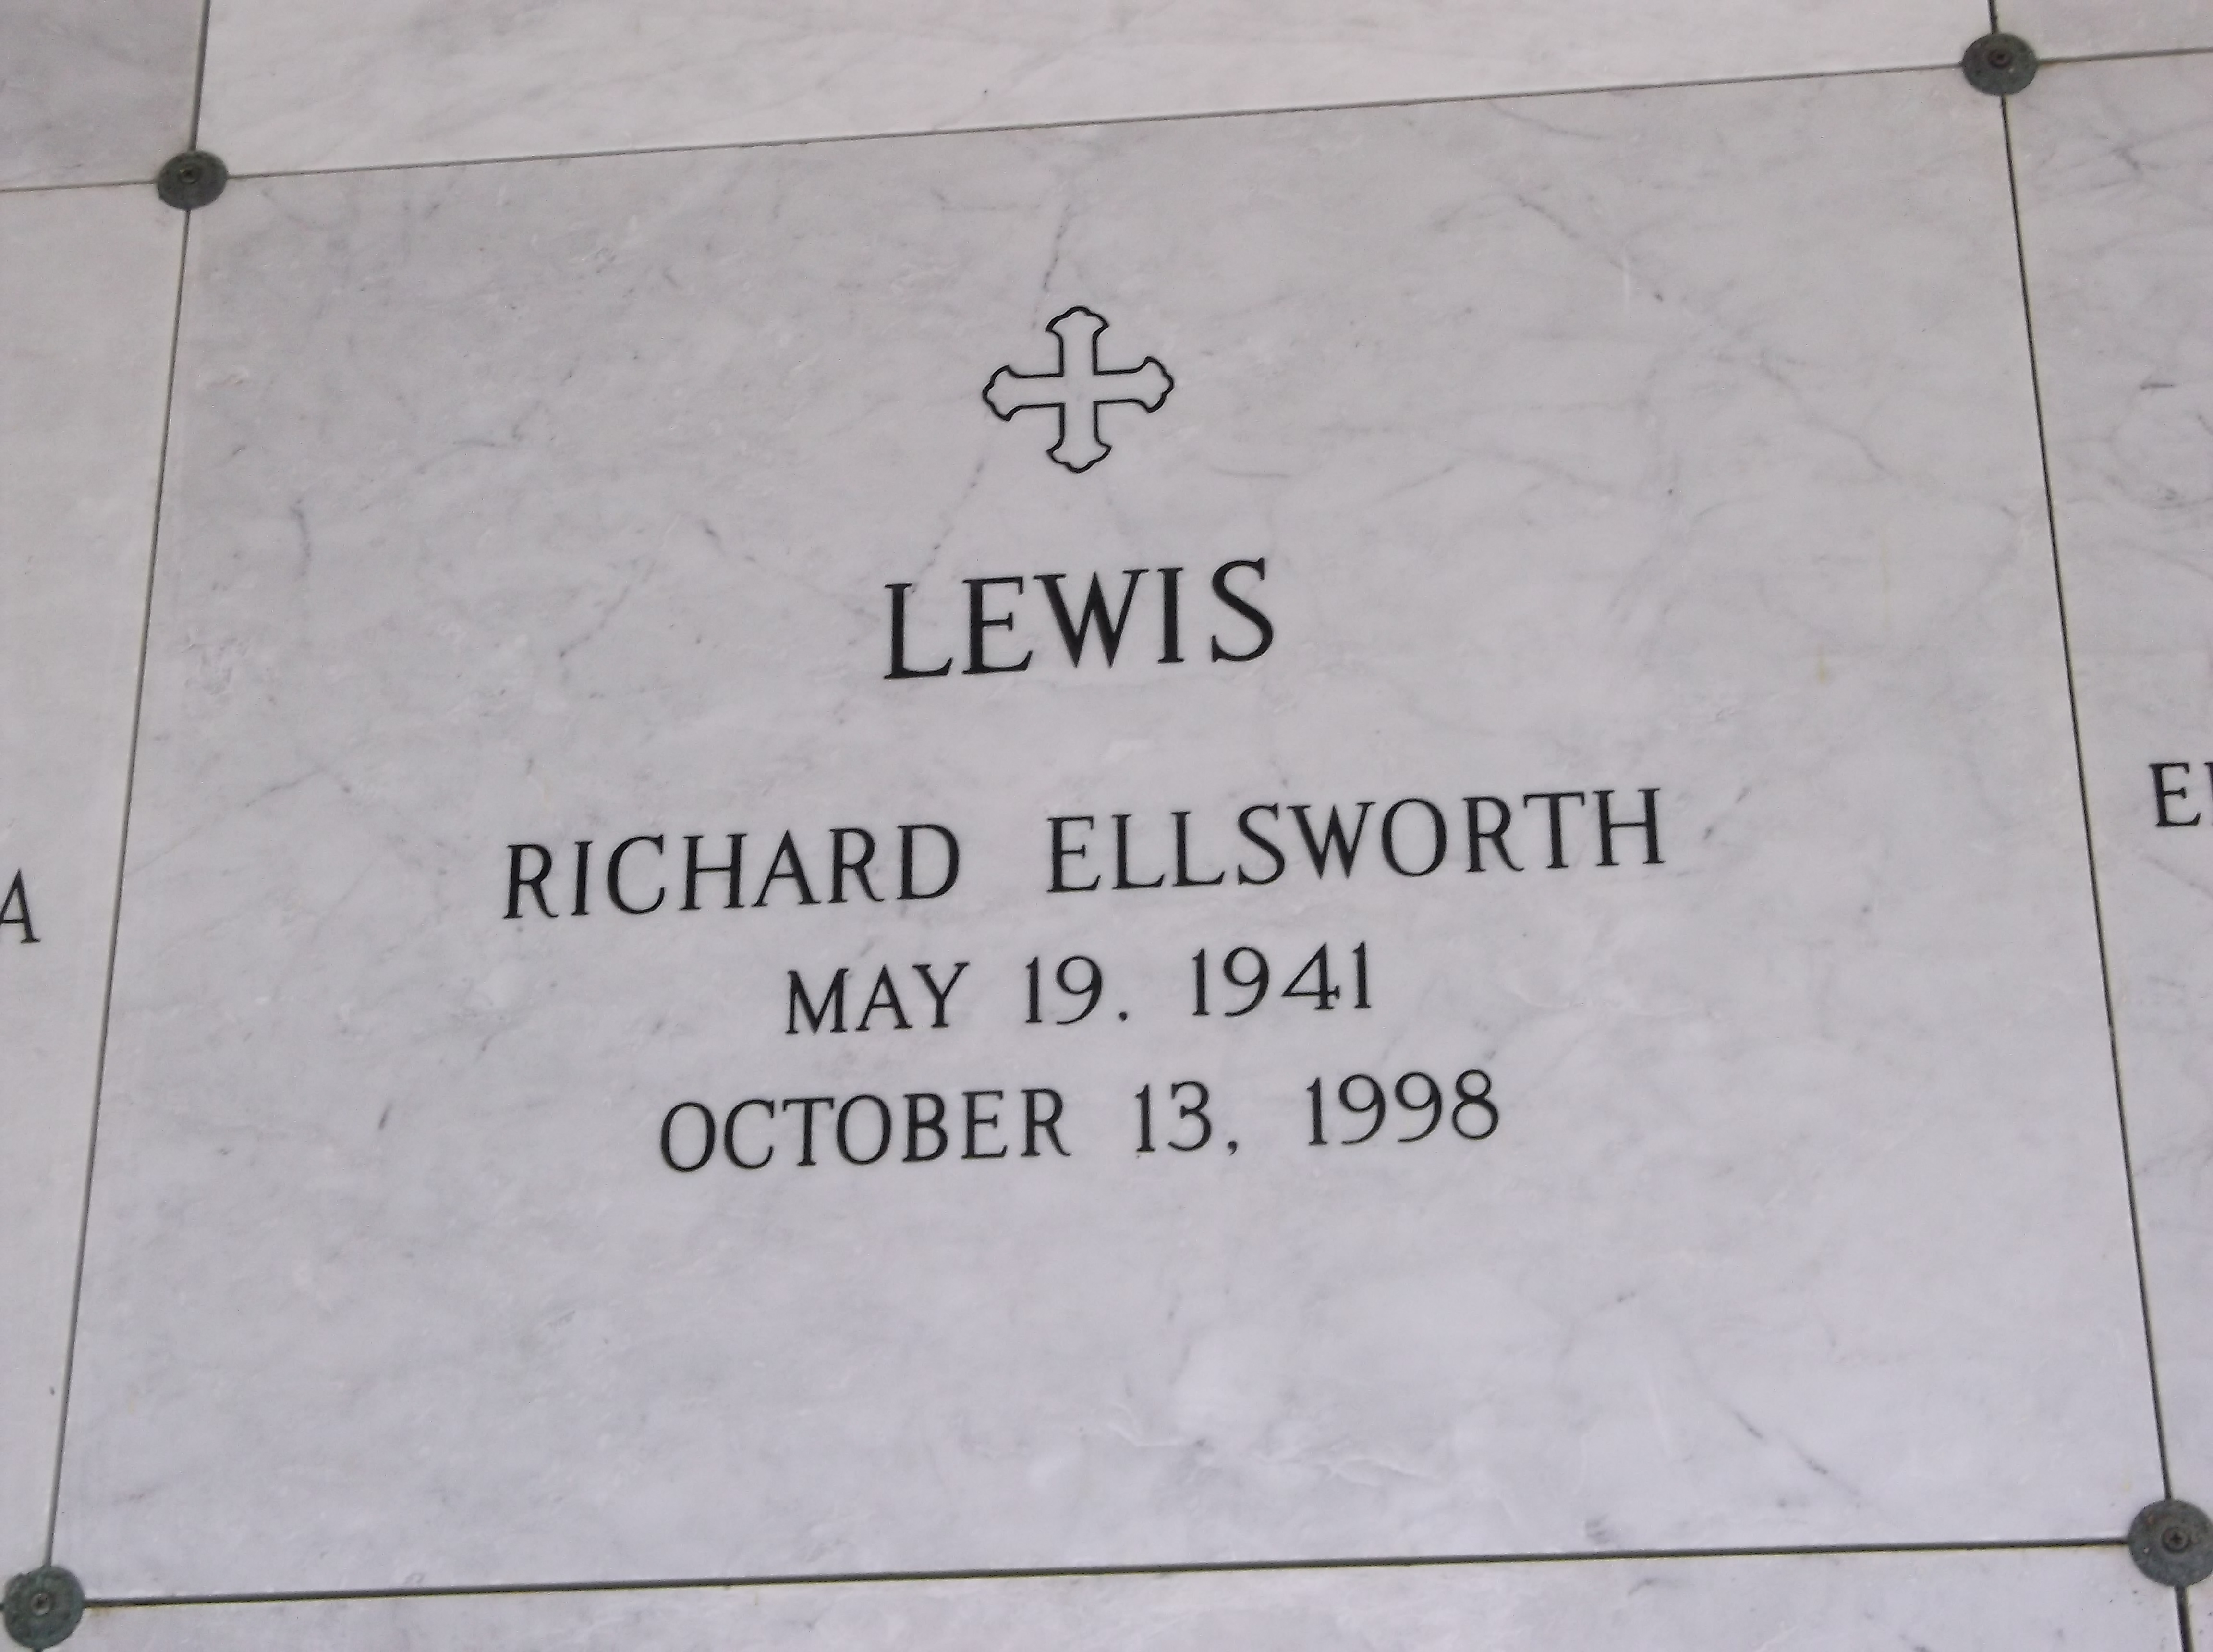 Richard Ellsworth Lewis